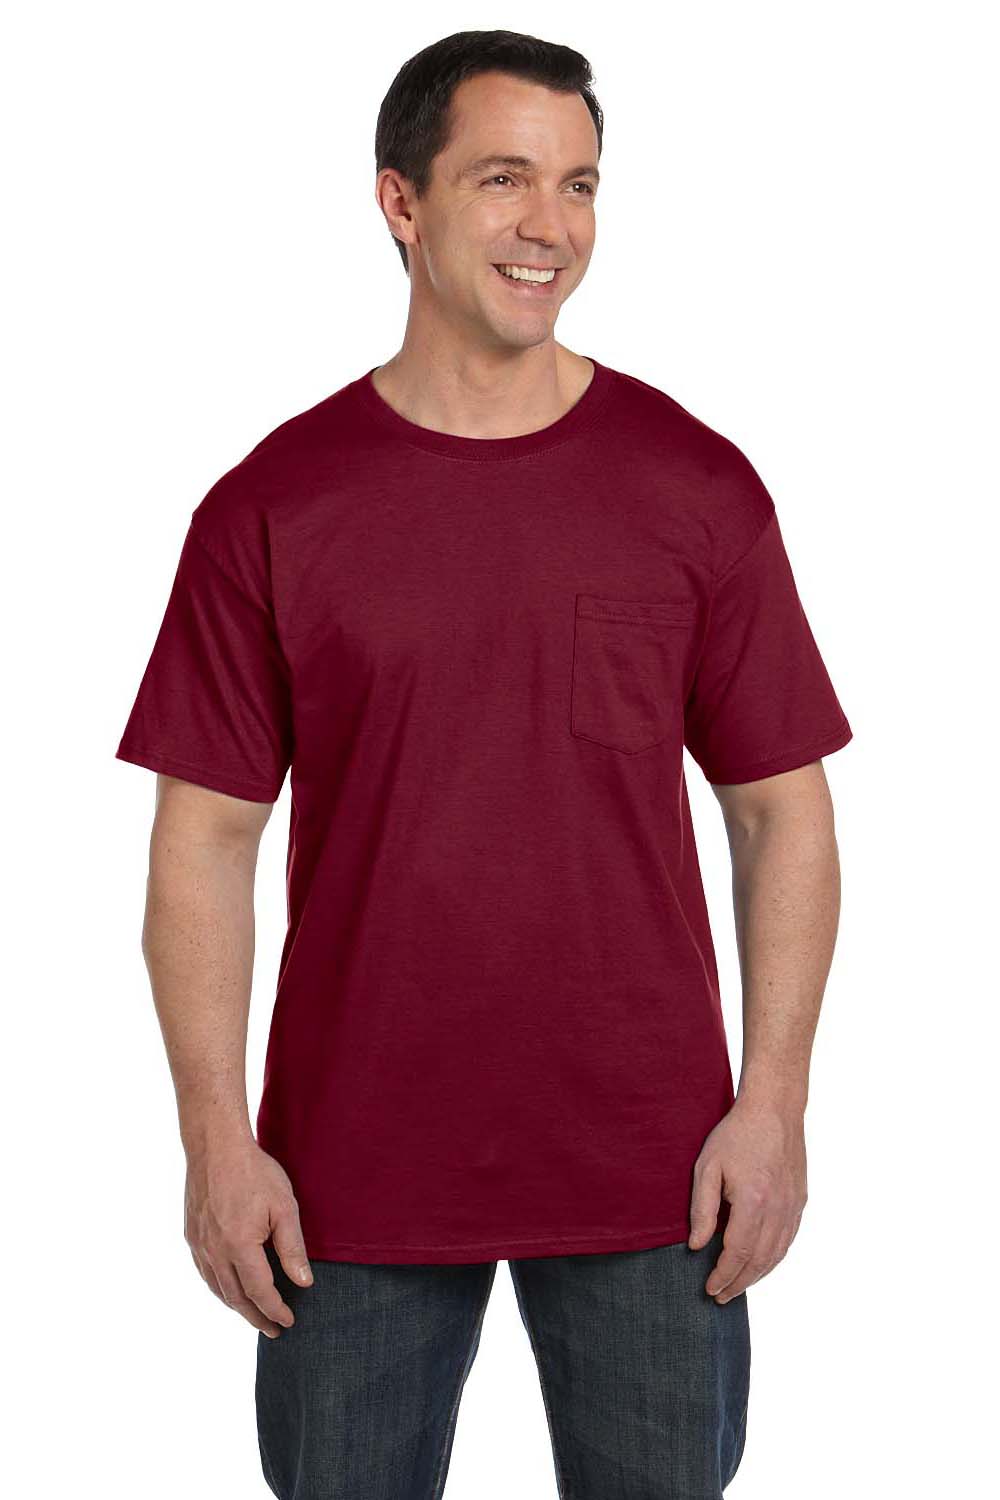 Hanes 5190P Mens Beefy-T Short Sleeve Crewneck T-Shirt w/ Pocket Cardinal Red Front